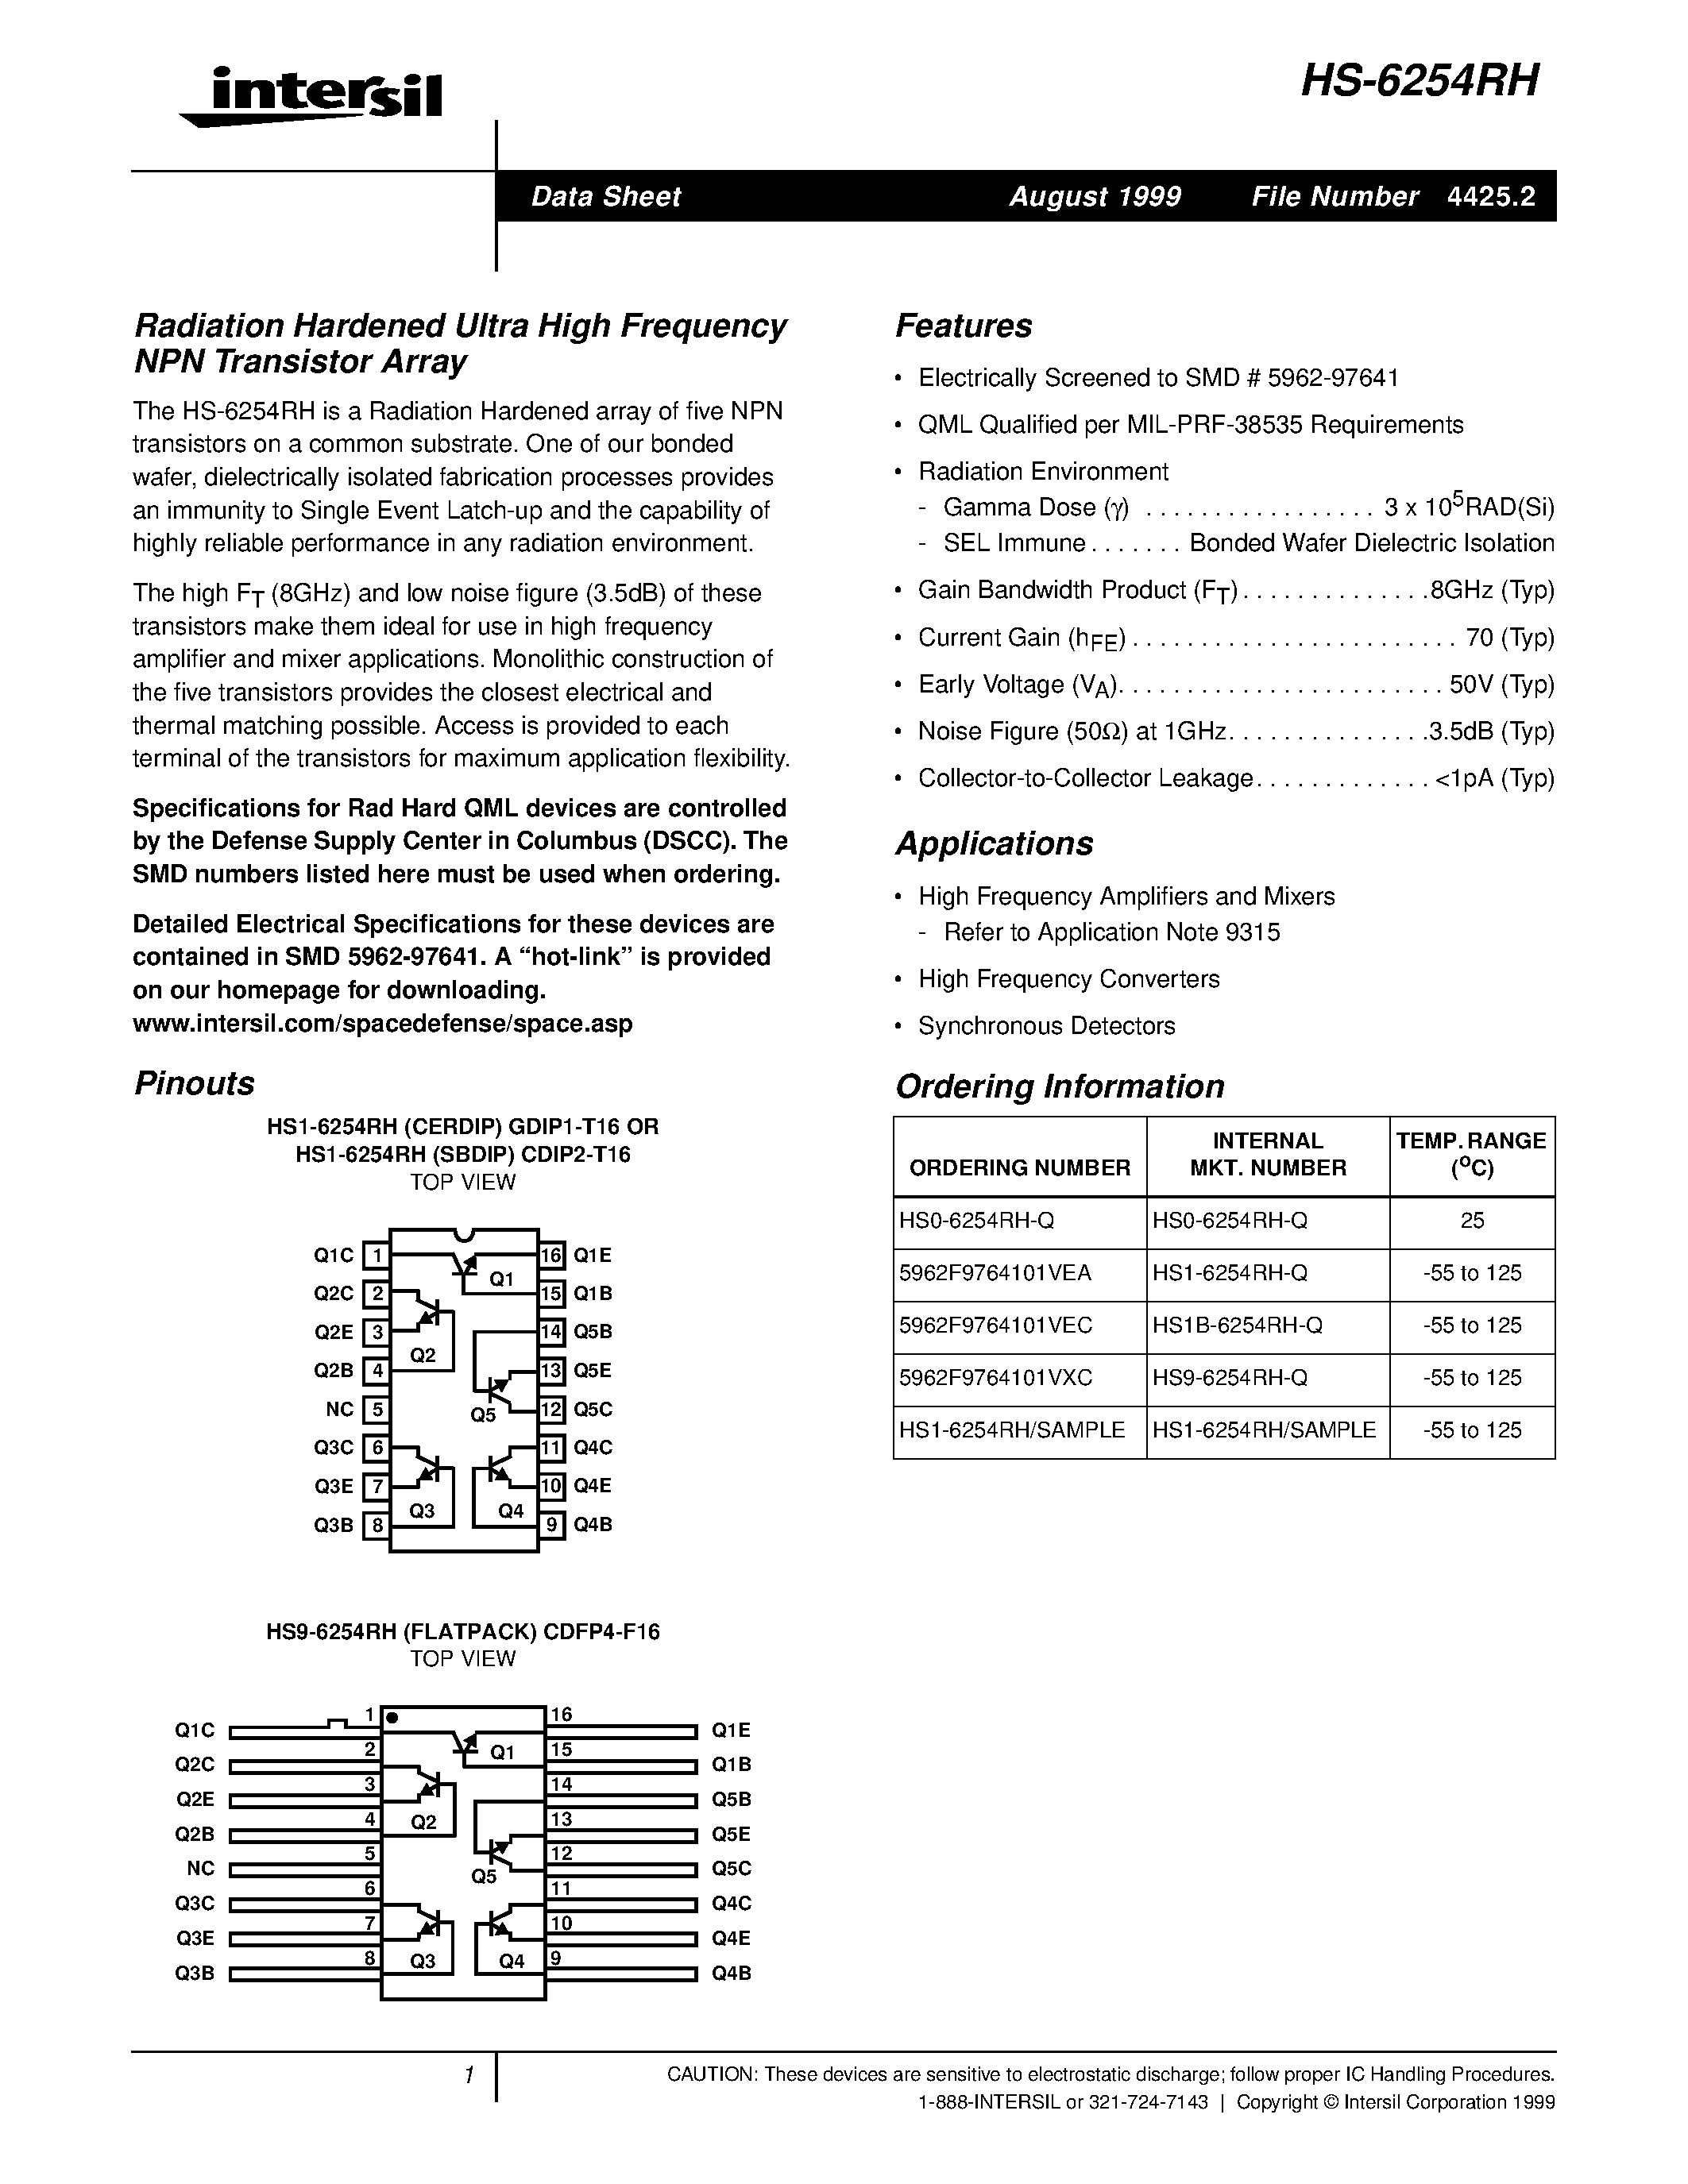 Datasheet HS1-6254RH-Q - Radiation Hardened Ultra High Frequency NPN Transistor Array page 1